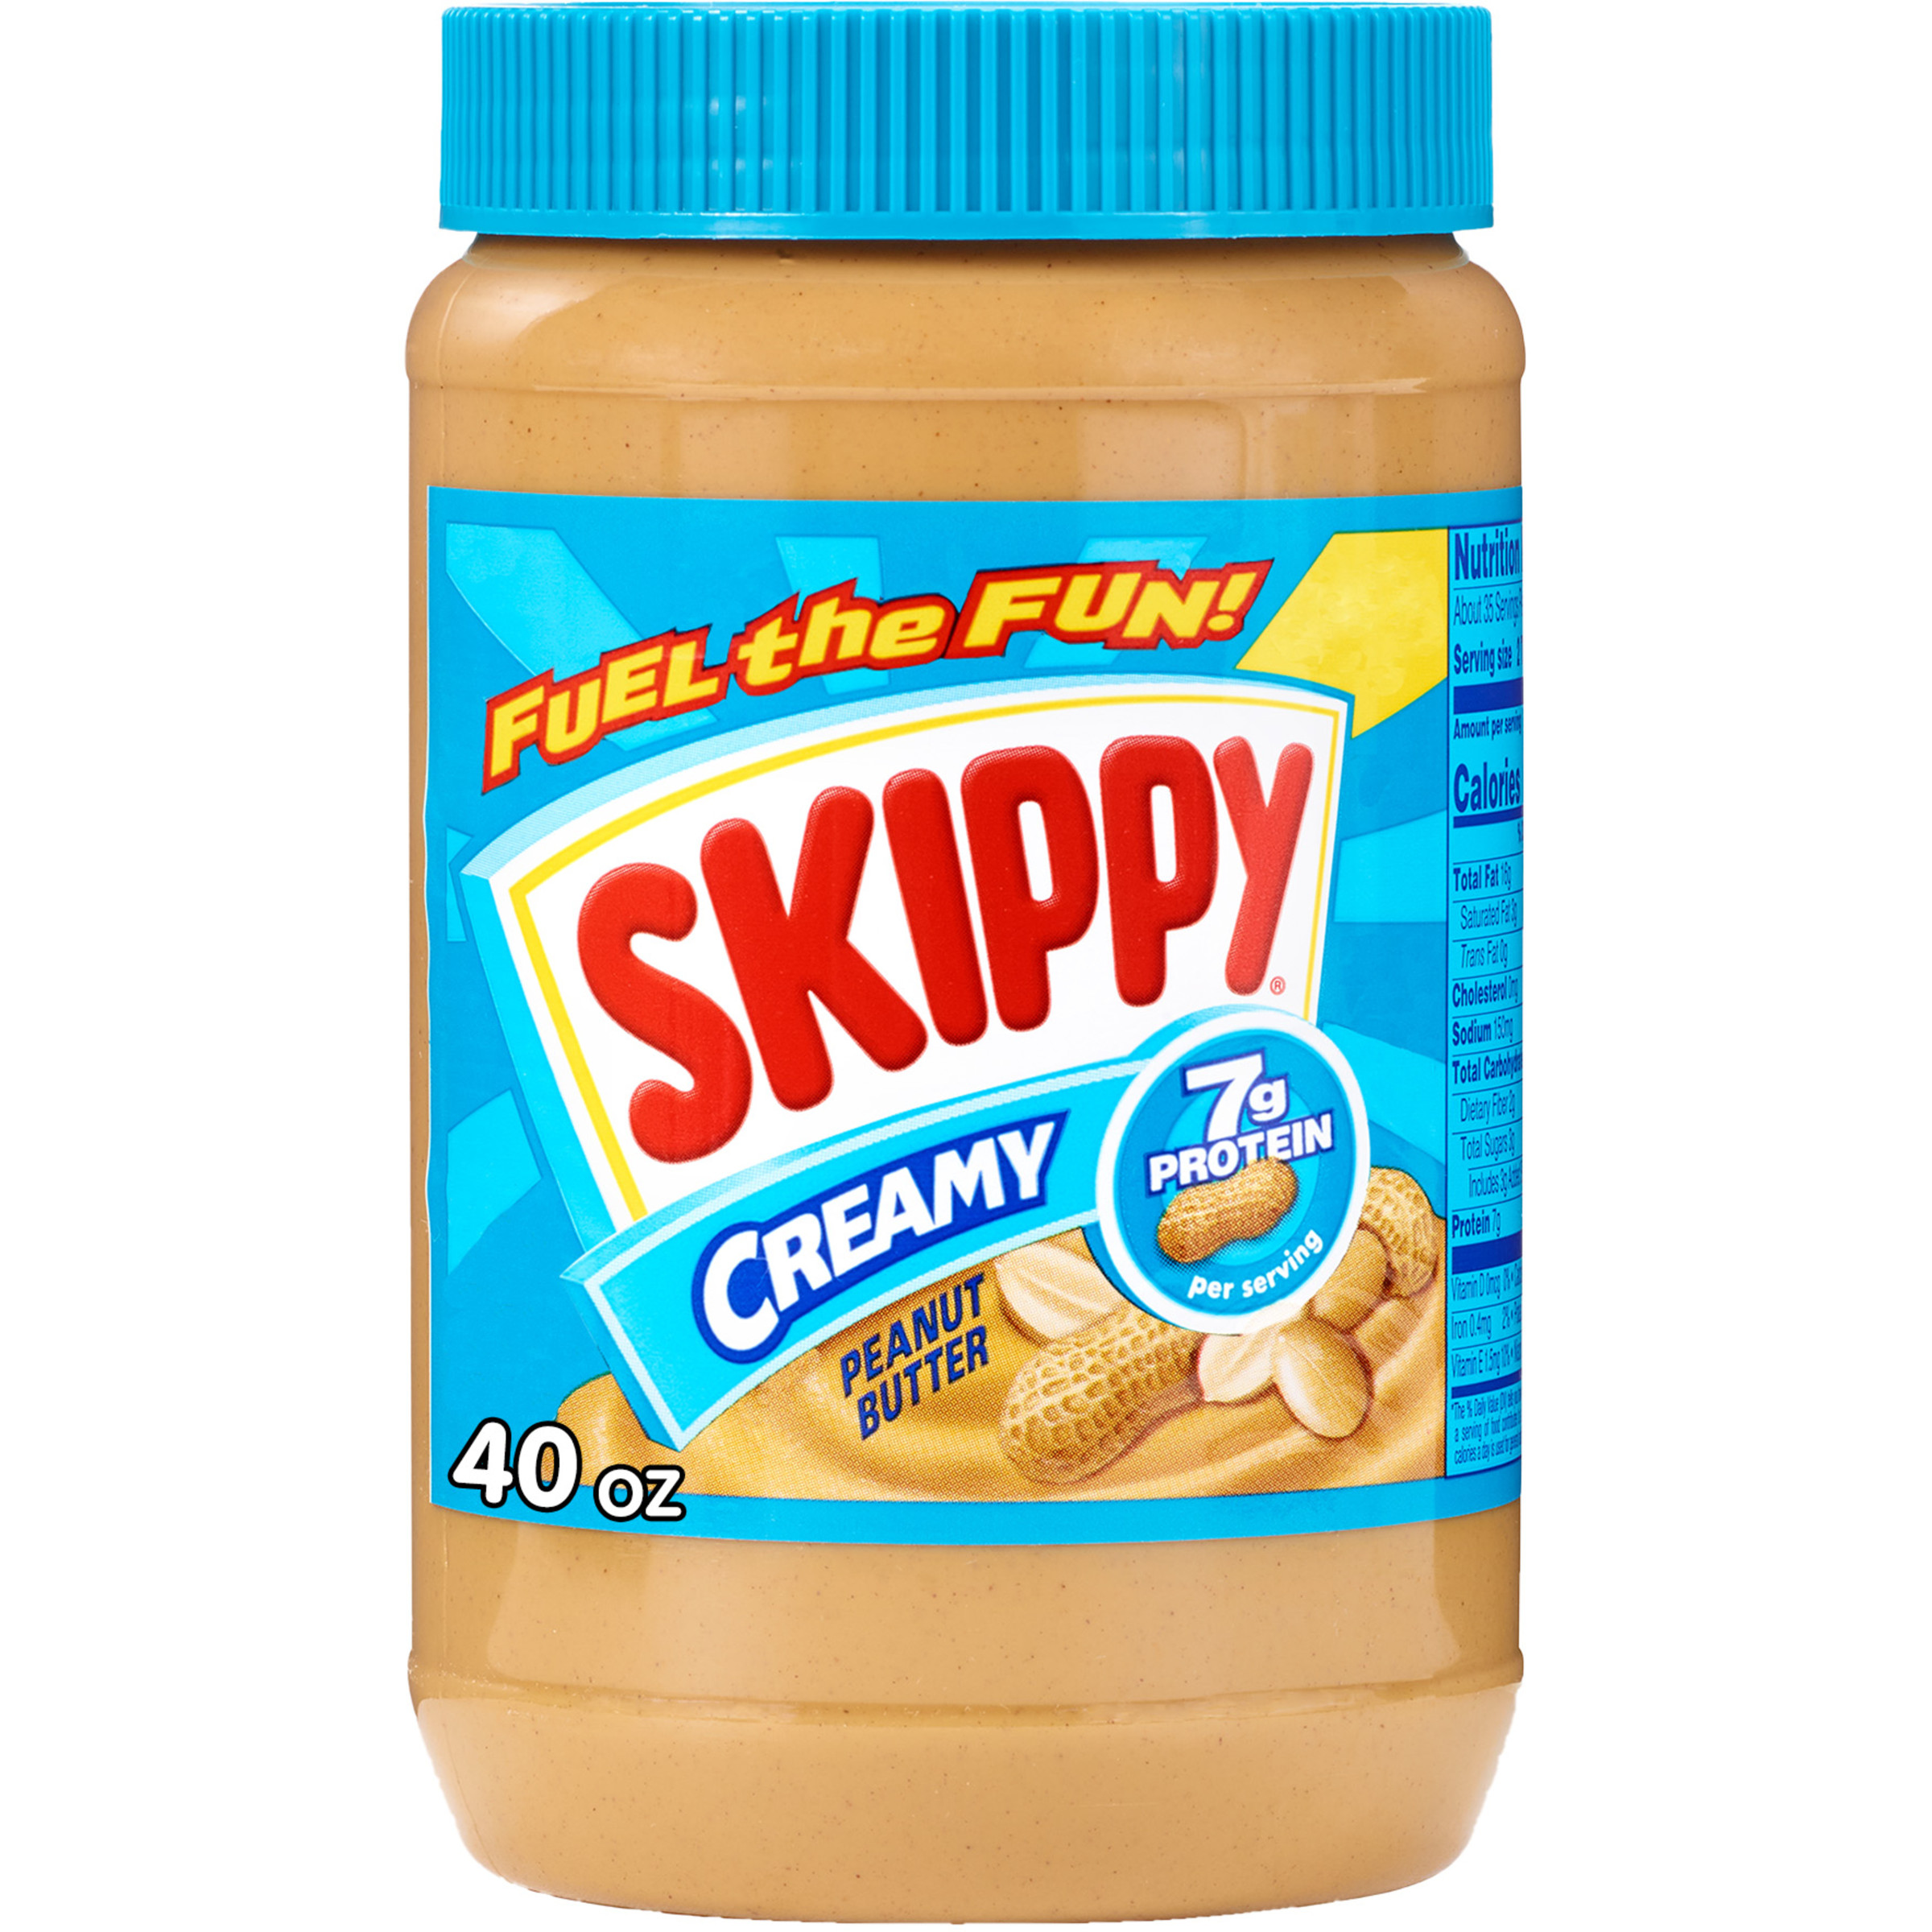 SKIPPY Peanut Butter, Creamy, 7 G Protein per Serving, 40 oz Plastic Jar - image 1 of 12